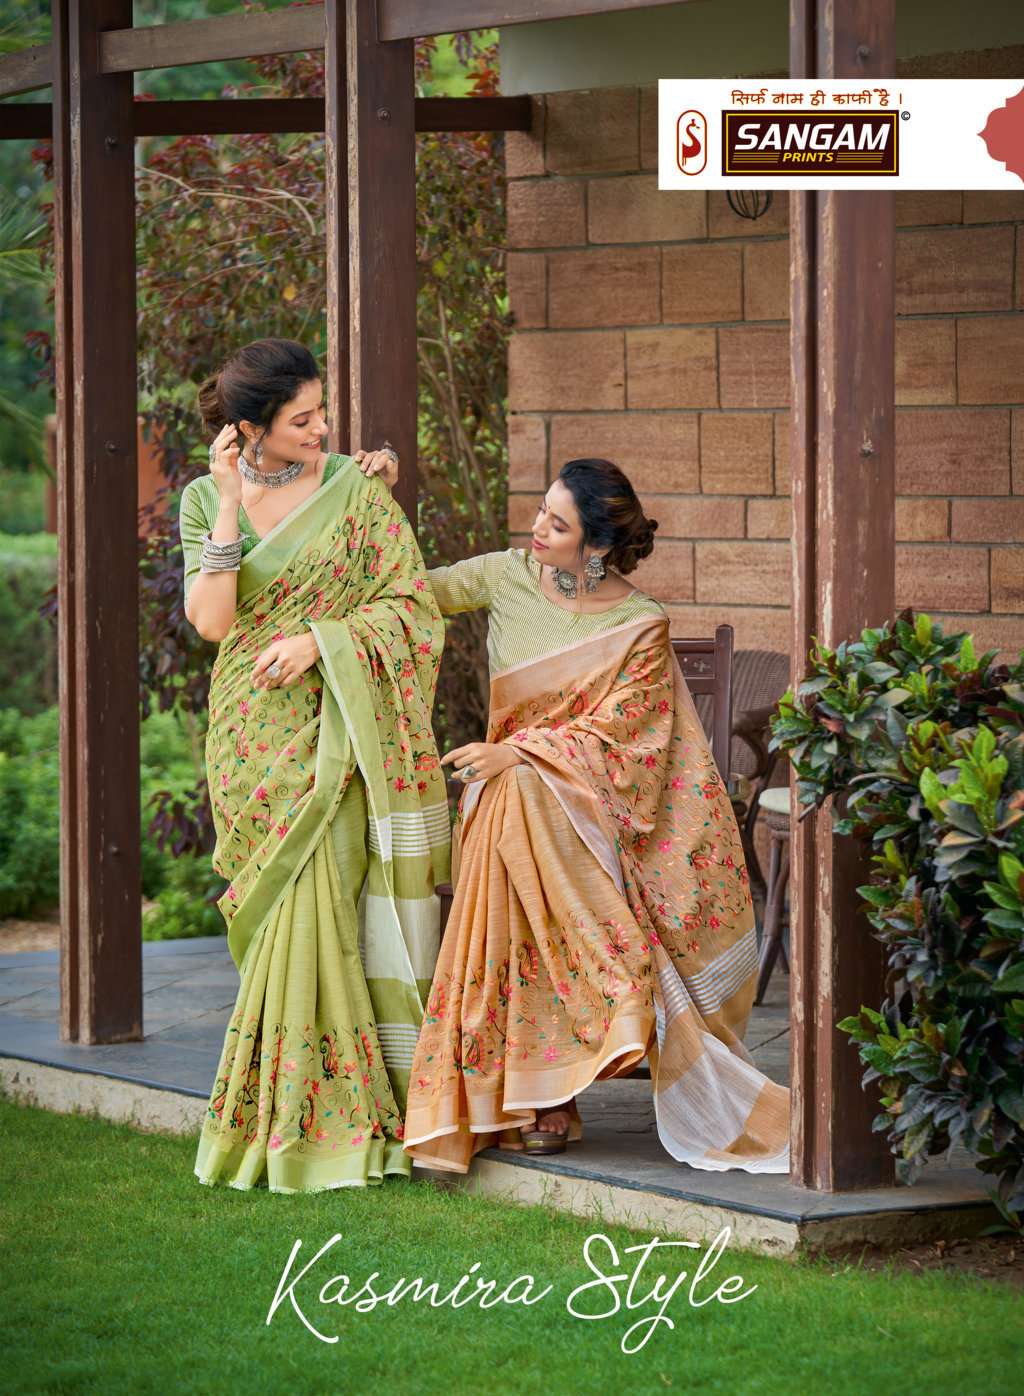 sangam prints kashmira style linen embroidery saris wholesaler